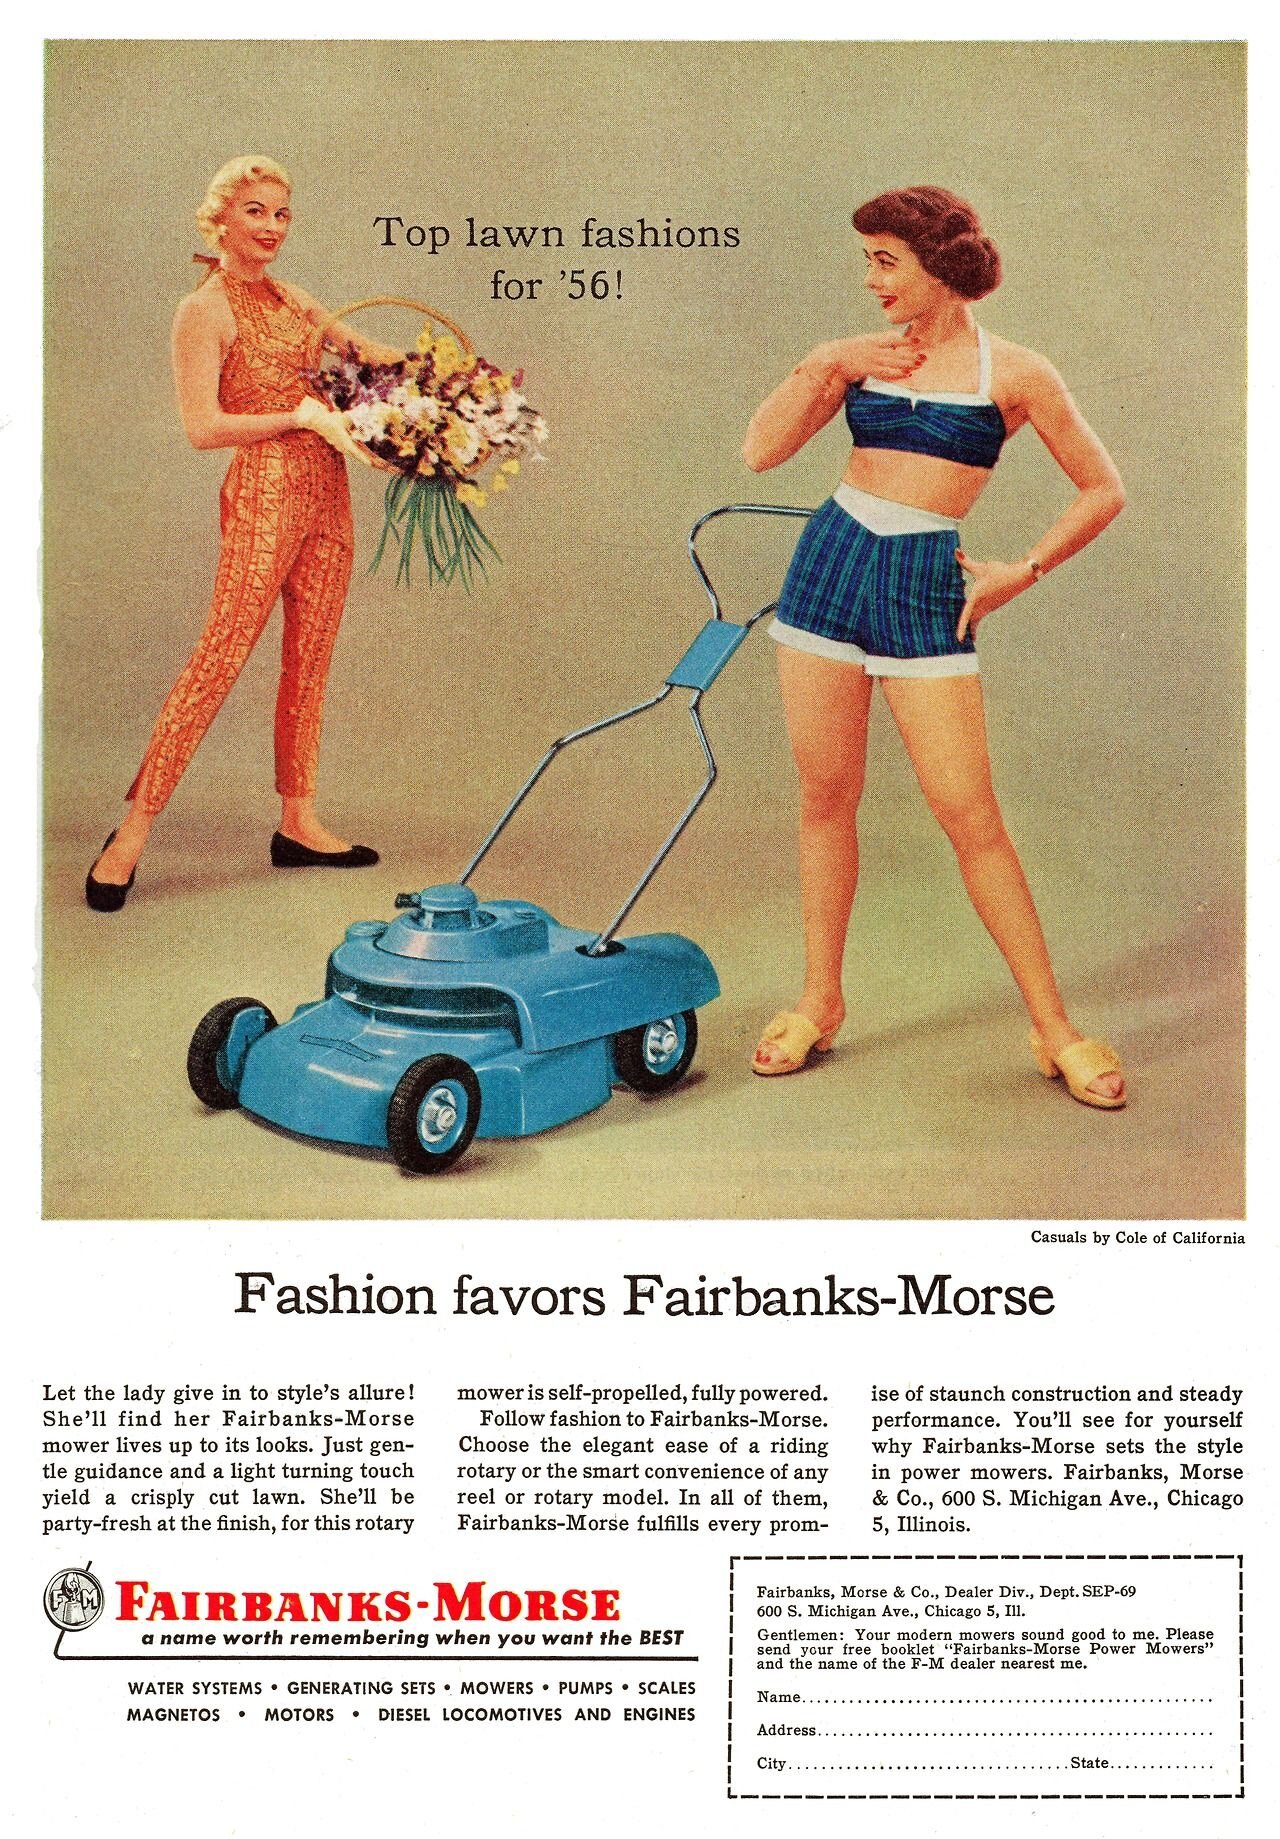 lawnmower 7.4 1956 Fairbanks-Morse fashion.jpg